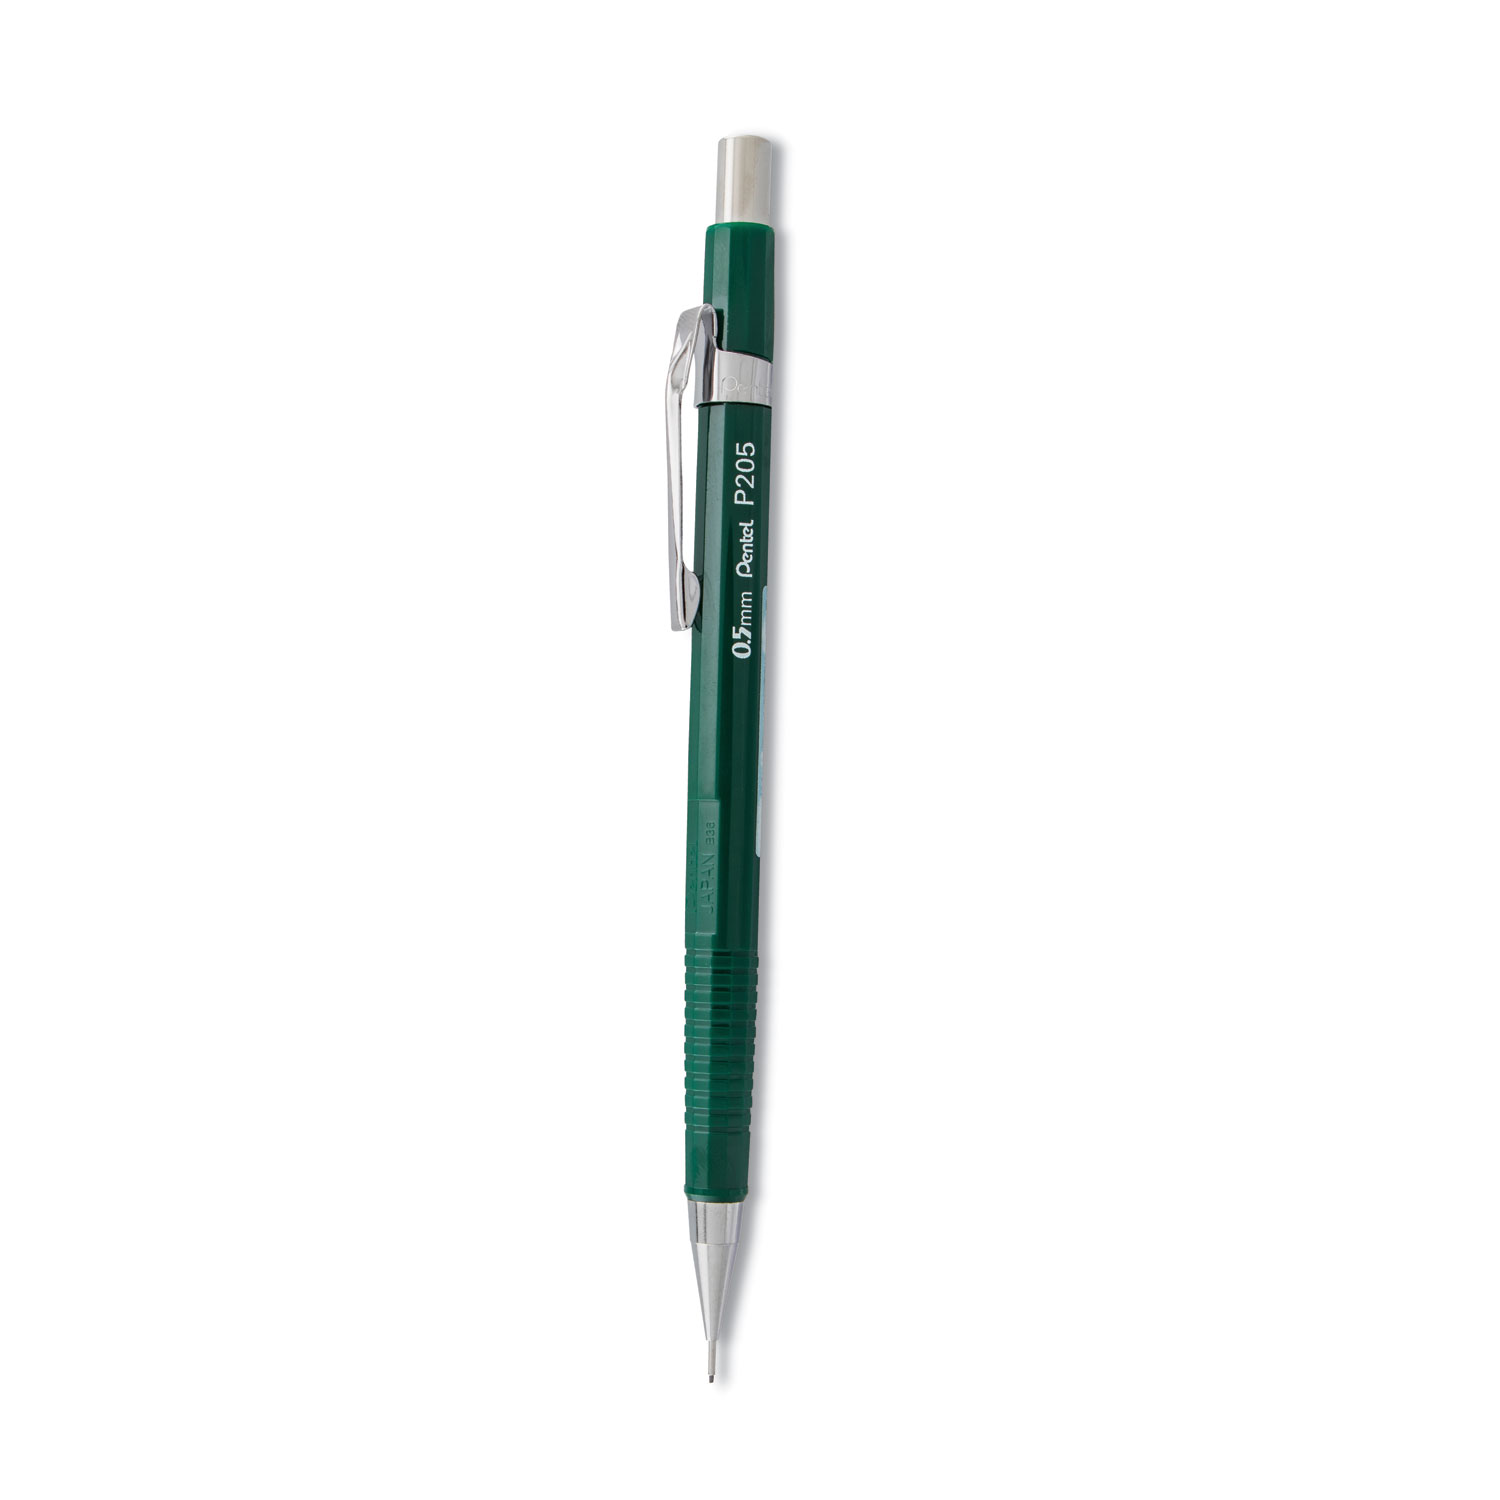  Pentel P205D Sharp Mechanical Pencil, 0.5 mm, HB (#2.5), Black Lead, Green Barrel (PENP205D) 